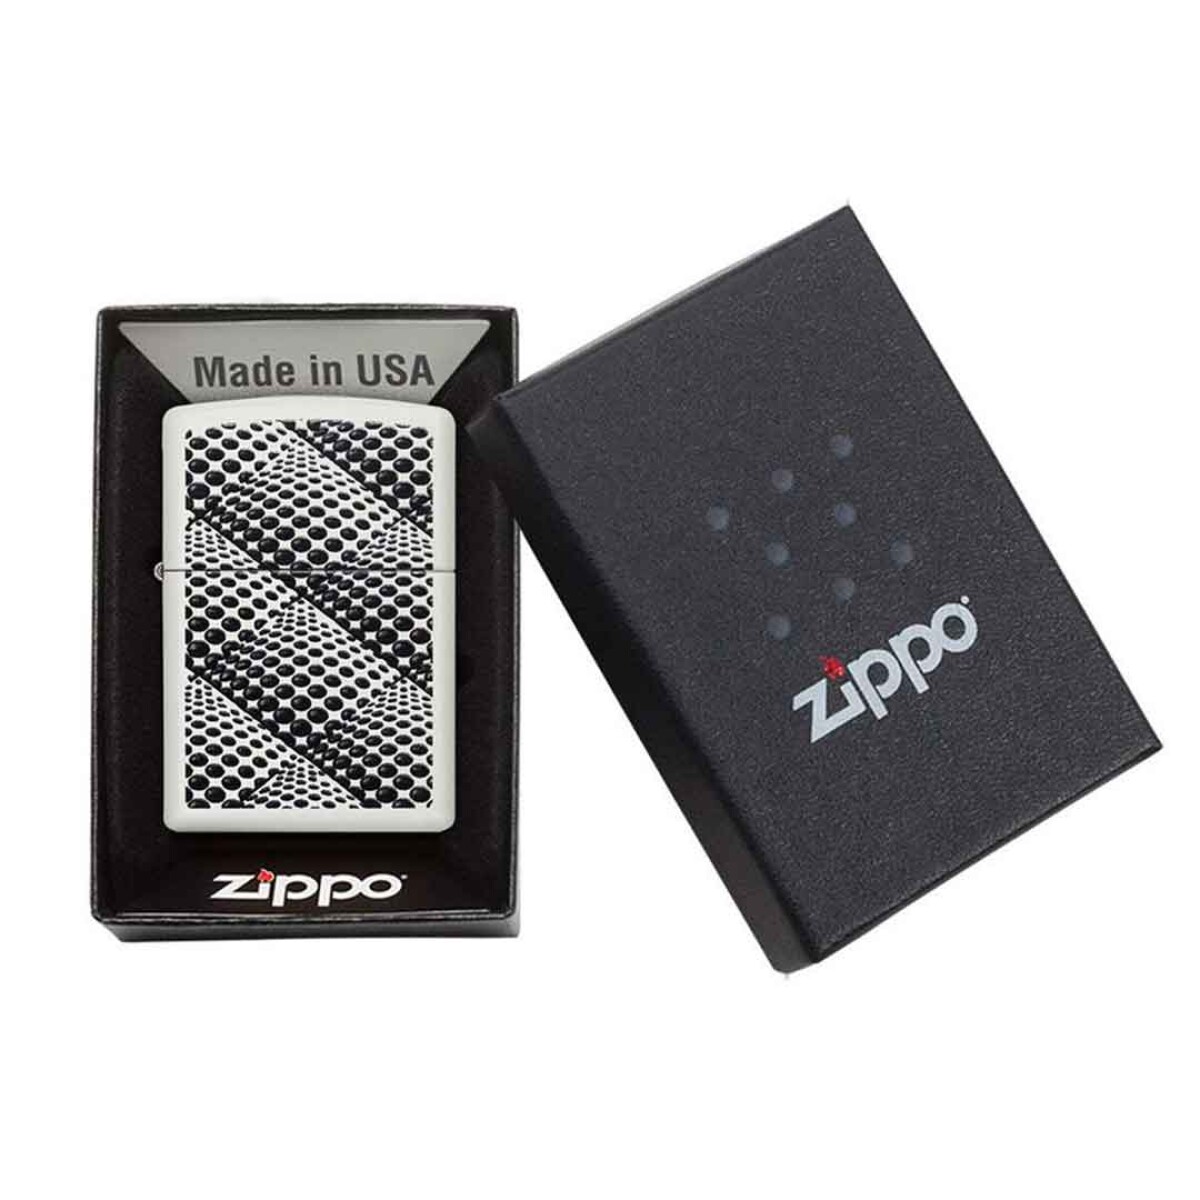 Zippo Dots and Boxes White - 001 